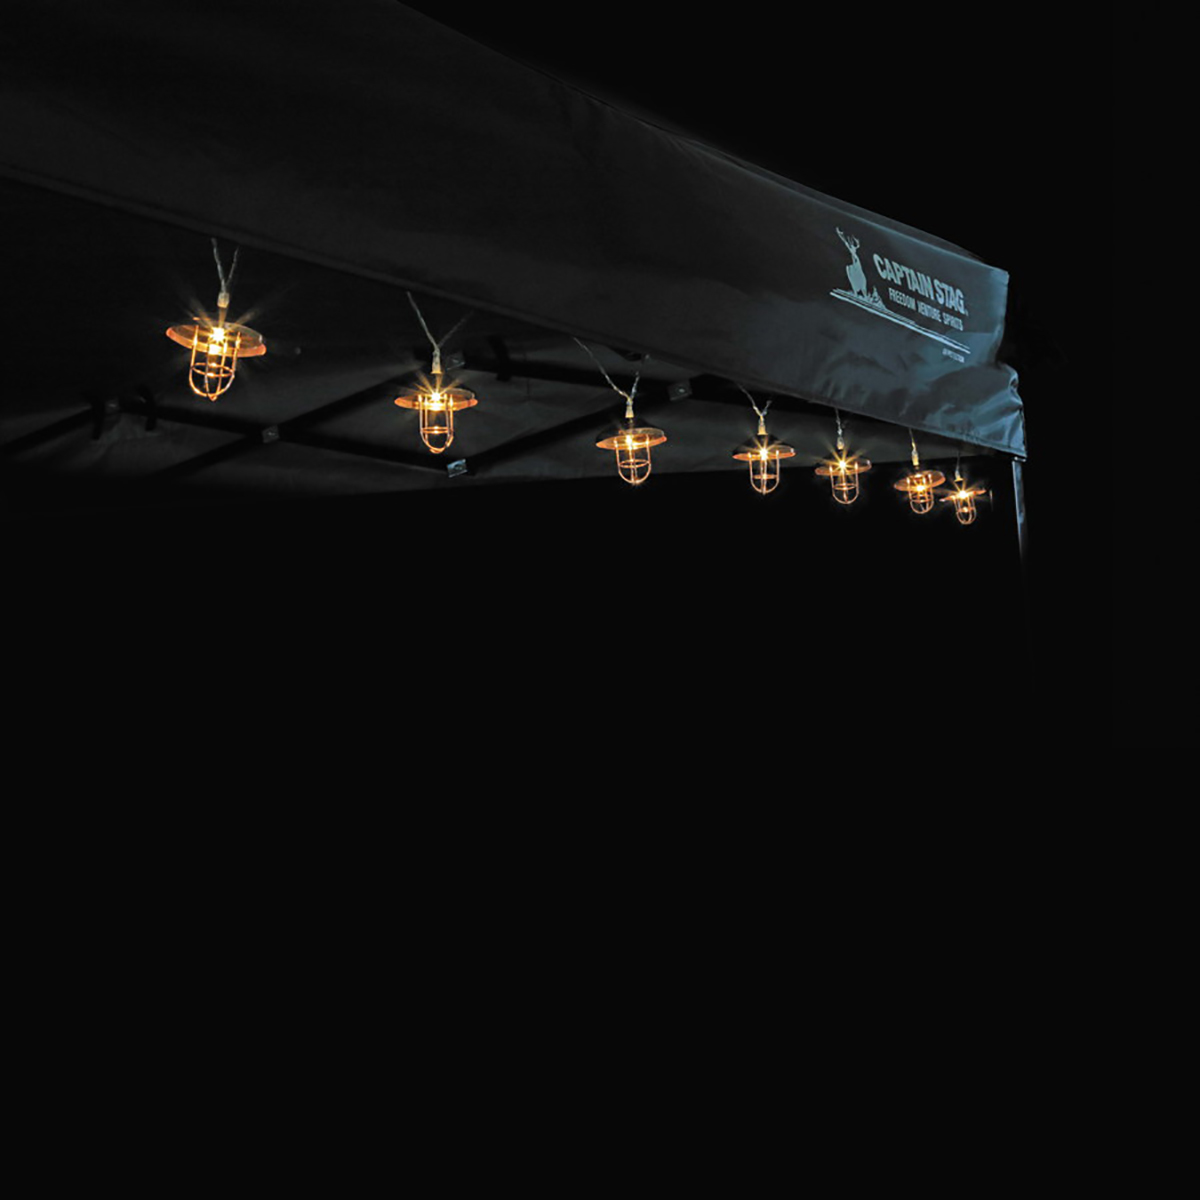 LEDデコレーションライト 10灯(ランプ) - アウトドア・キャンプ用品 ...